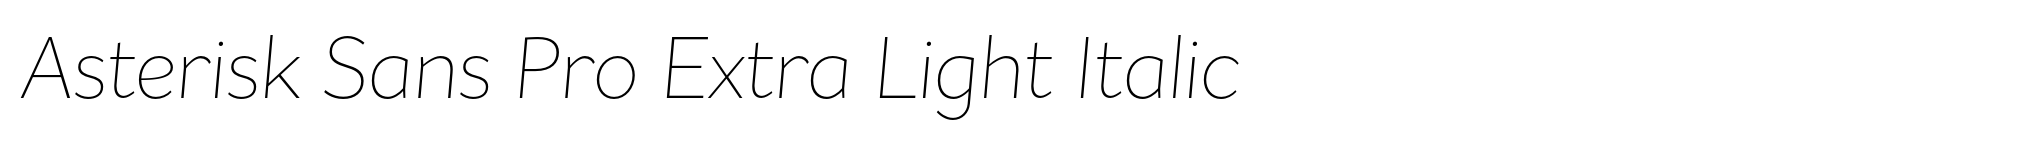 Asterisk Sans Pro Extra Light Italic image